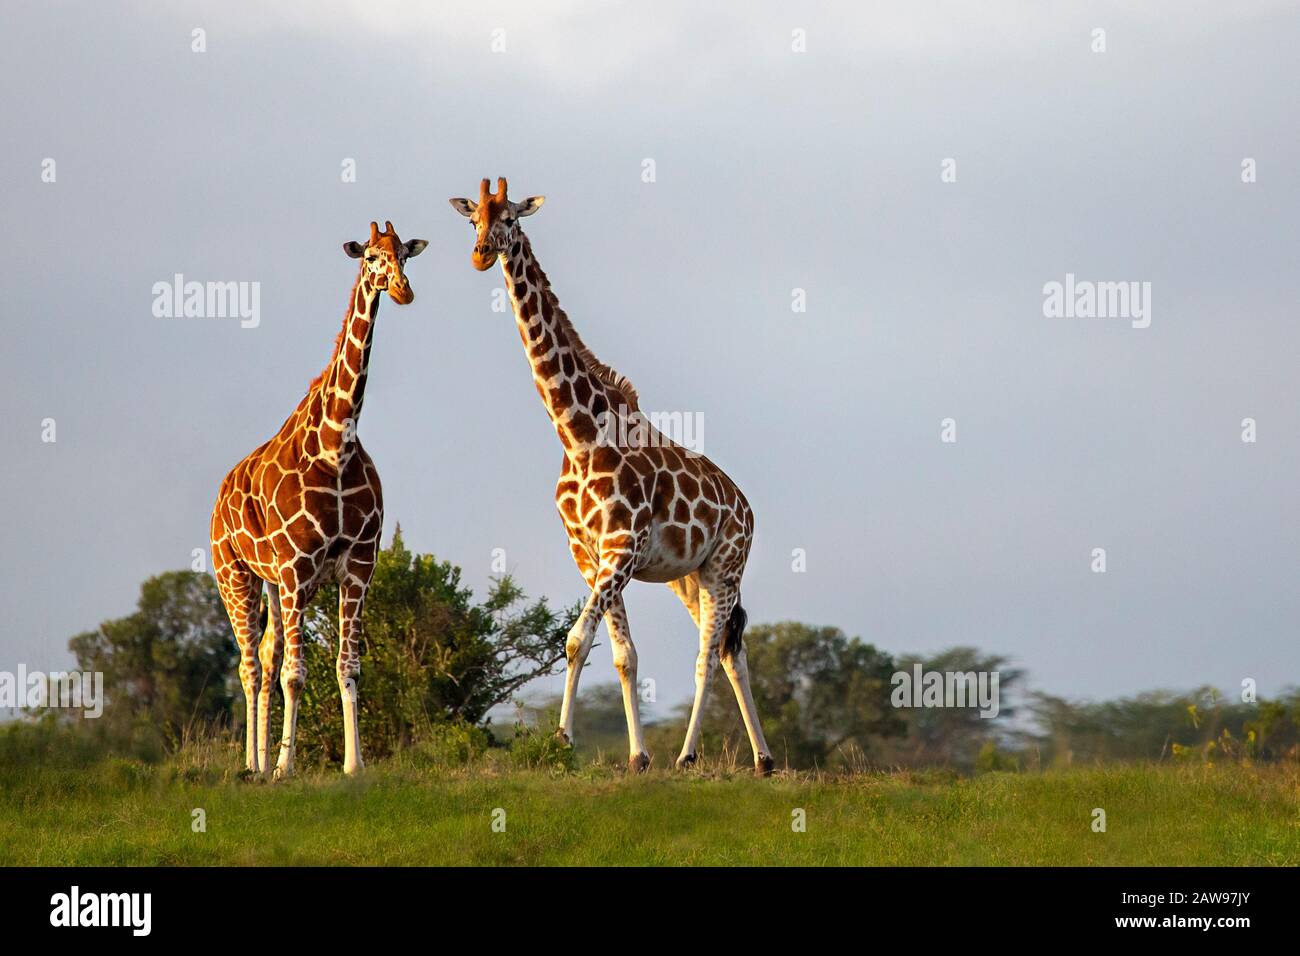 Netzgiraffen in Kenia, Afrika Stockfoto